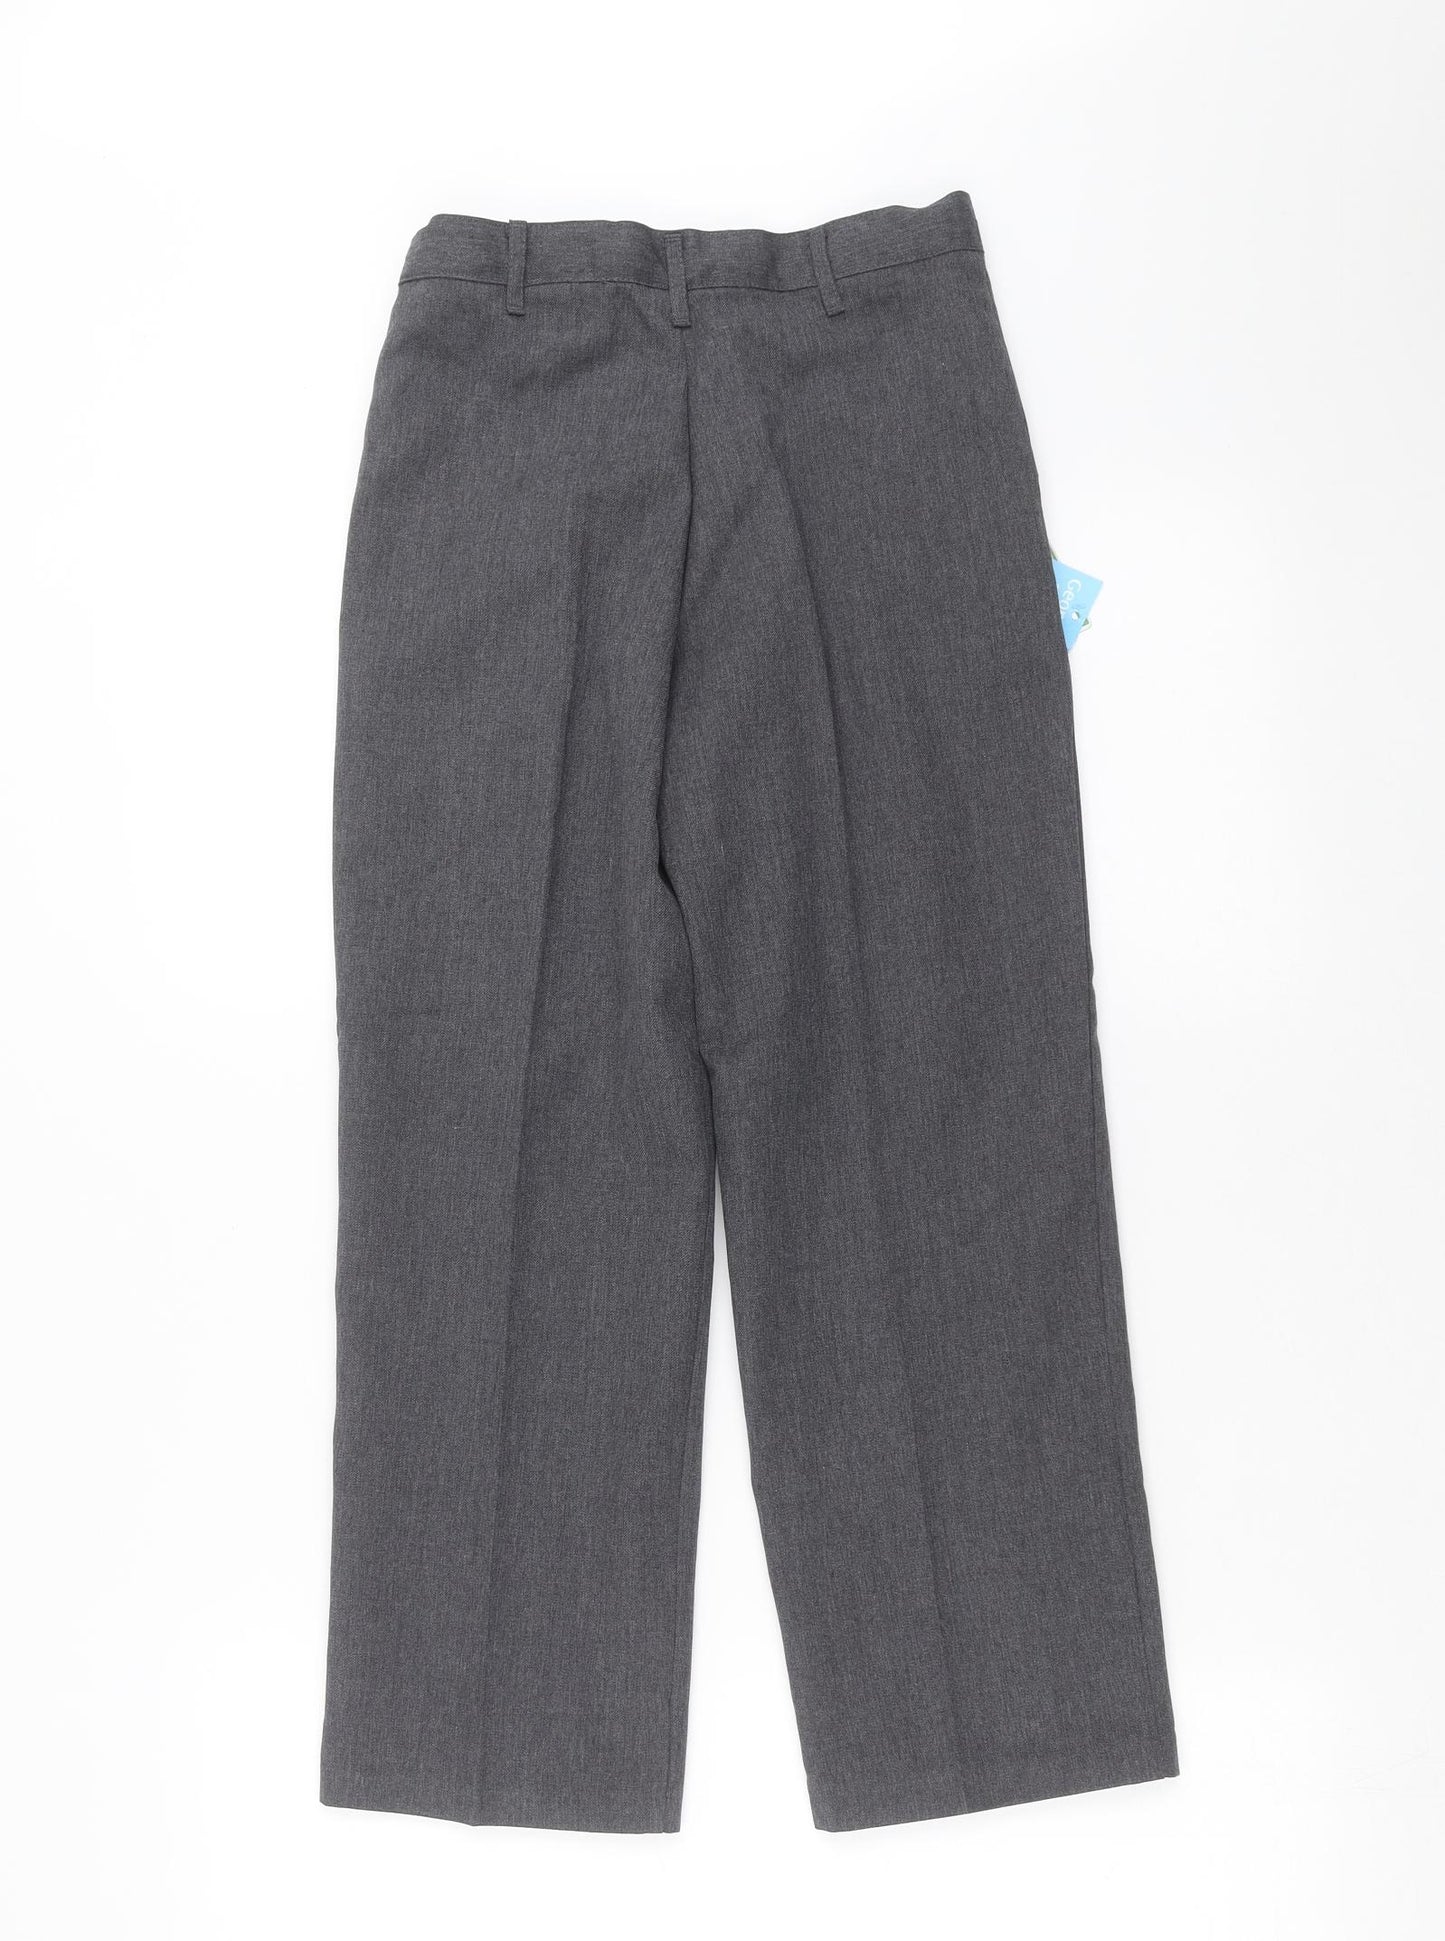 George Boys Grey    Trousers Size 8-9 Years - school